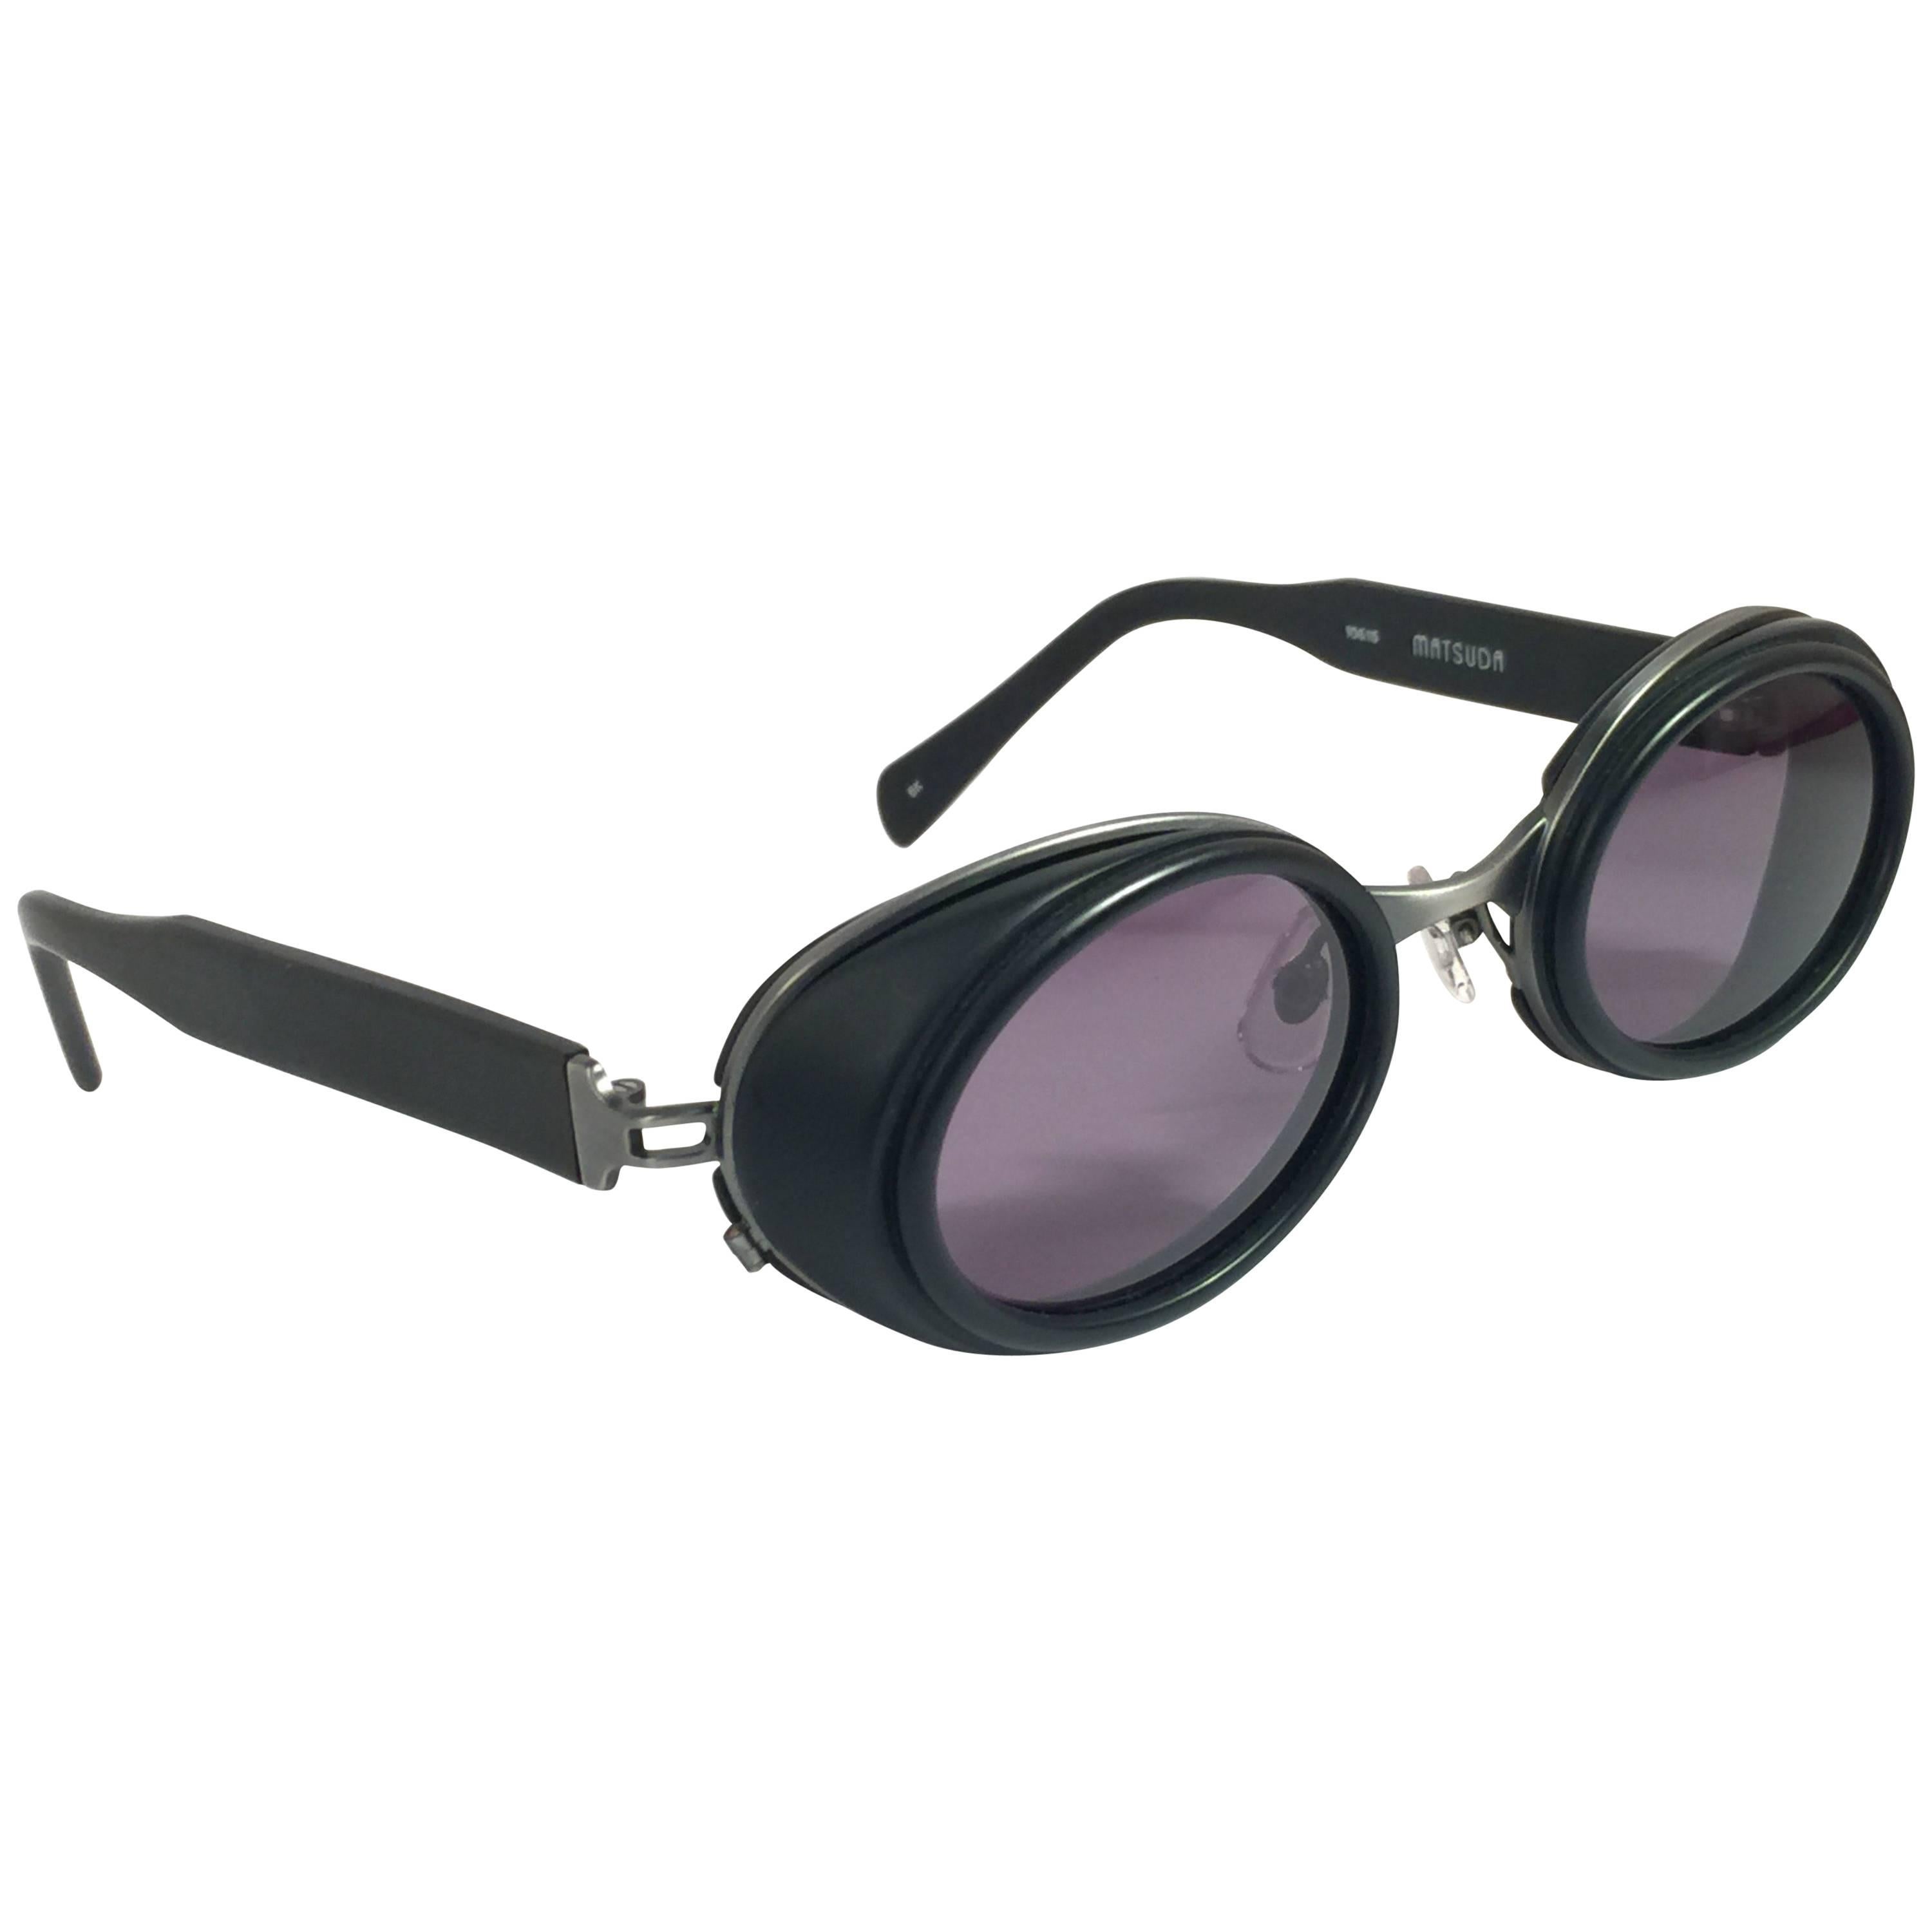 New Vintage Matsuda 10615 Black Matte Oval 1990's Made in Japan Sunglasses